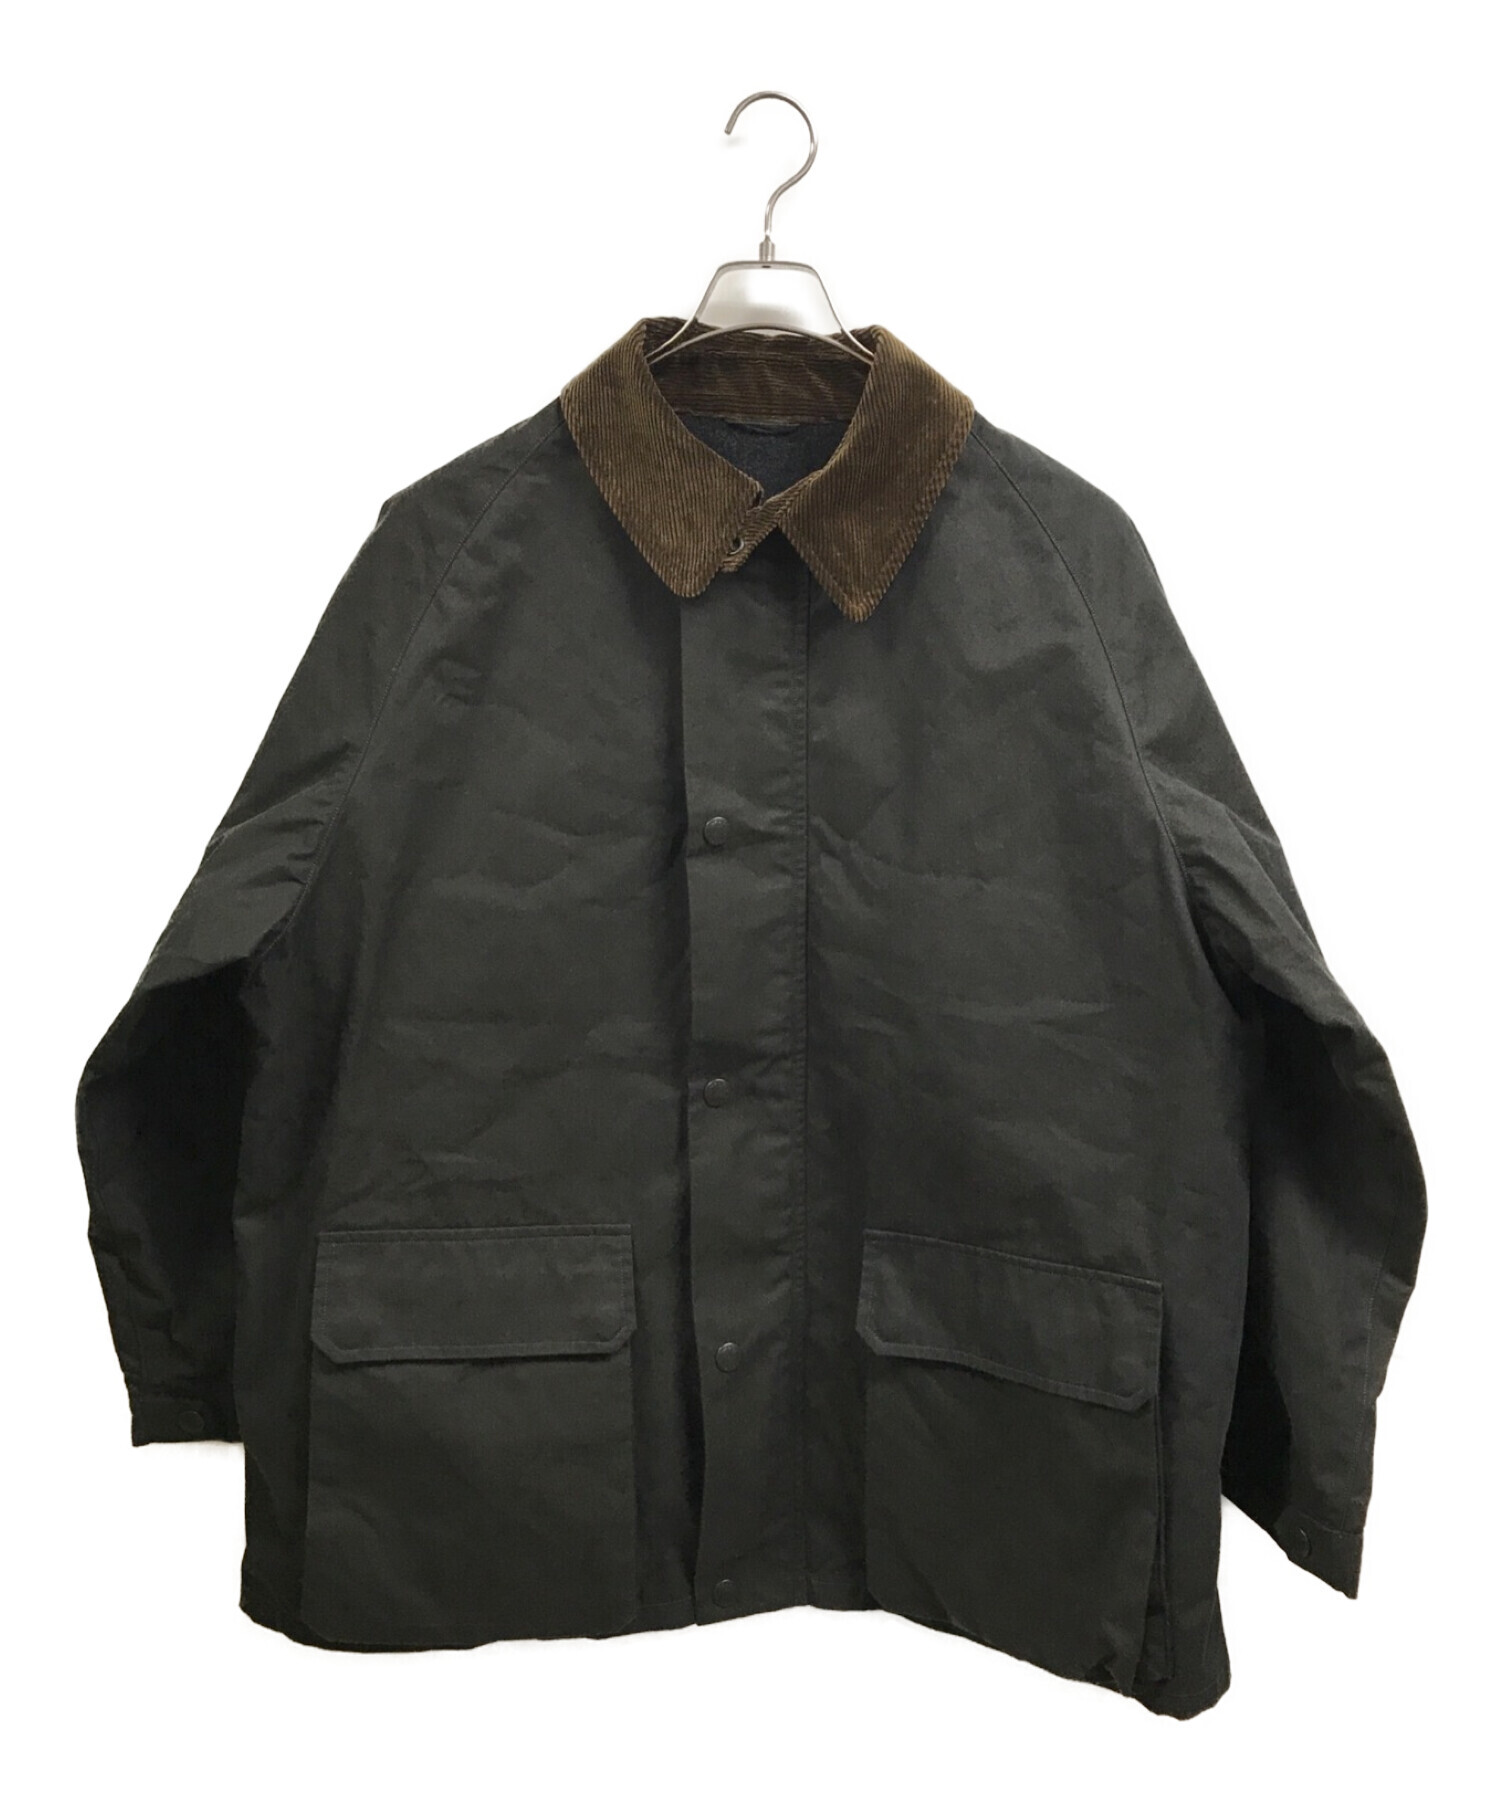 KAPTAIN SUNSHINE (キャプテンサンシャイン) Field Jacket セージグリーン サイズ:40